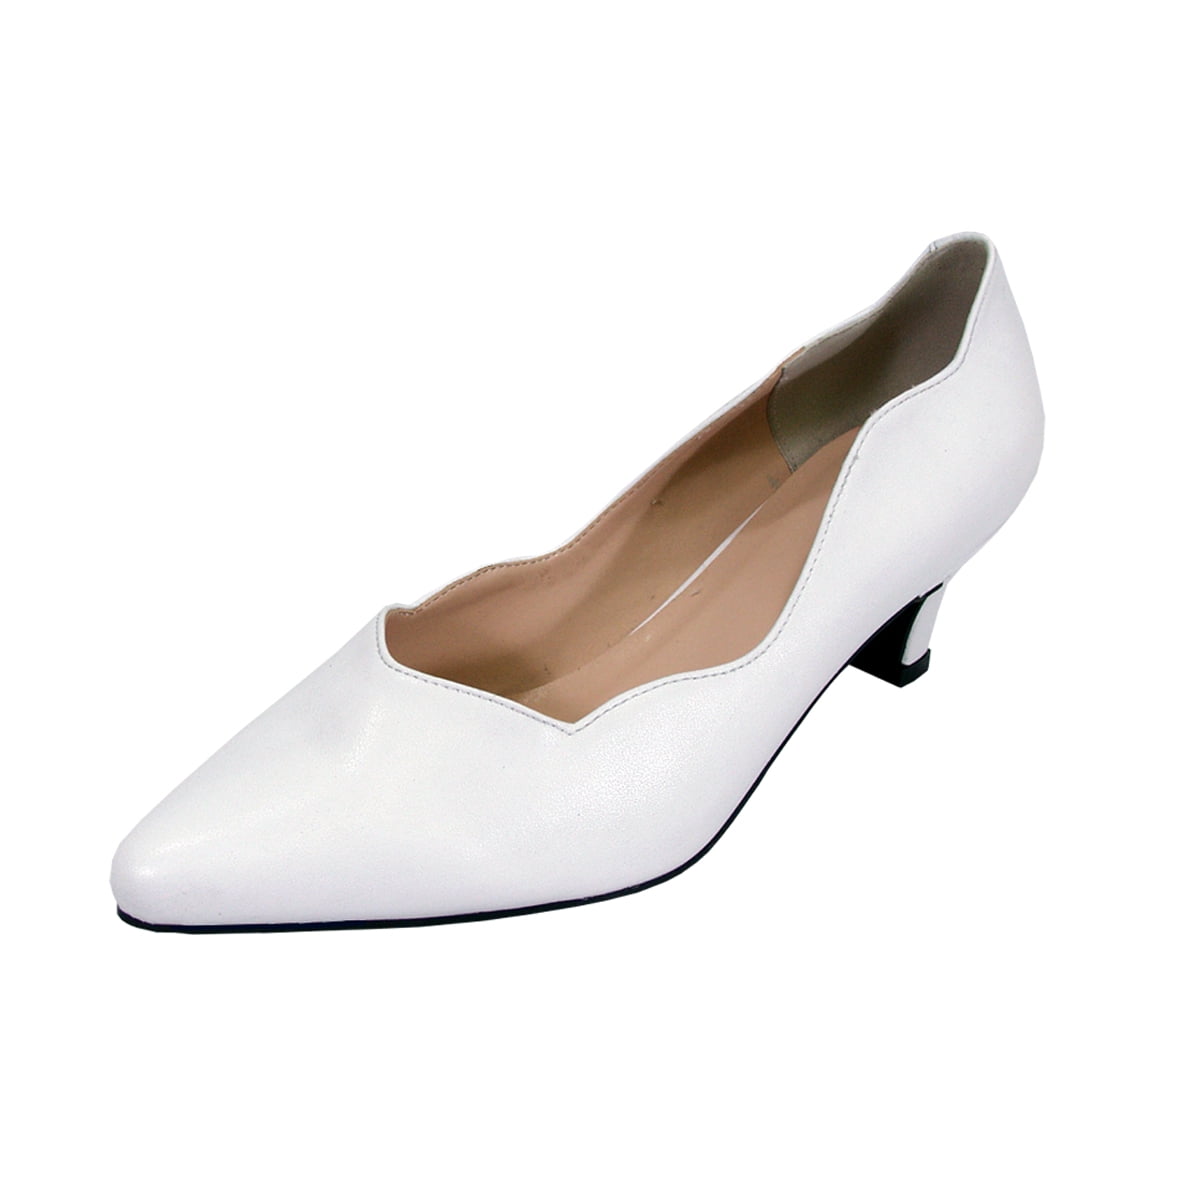 ladies white dress shoes